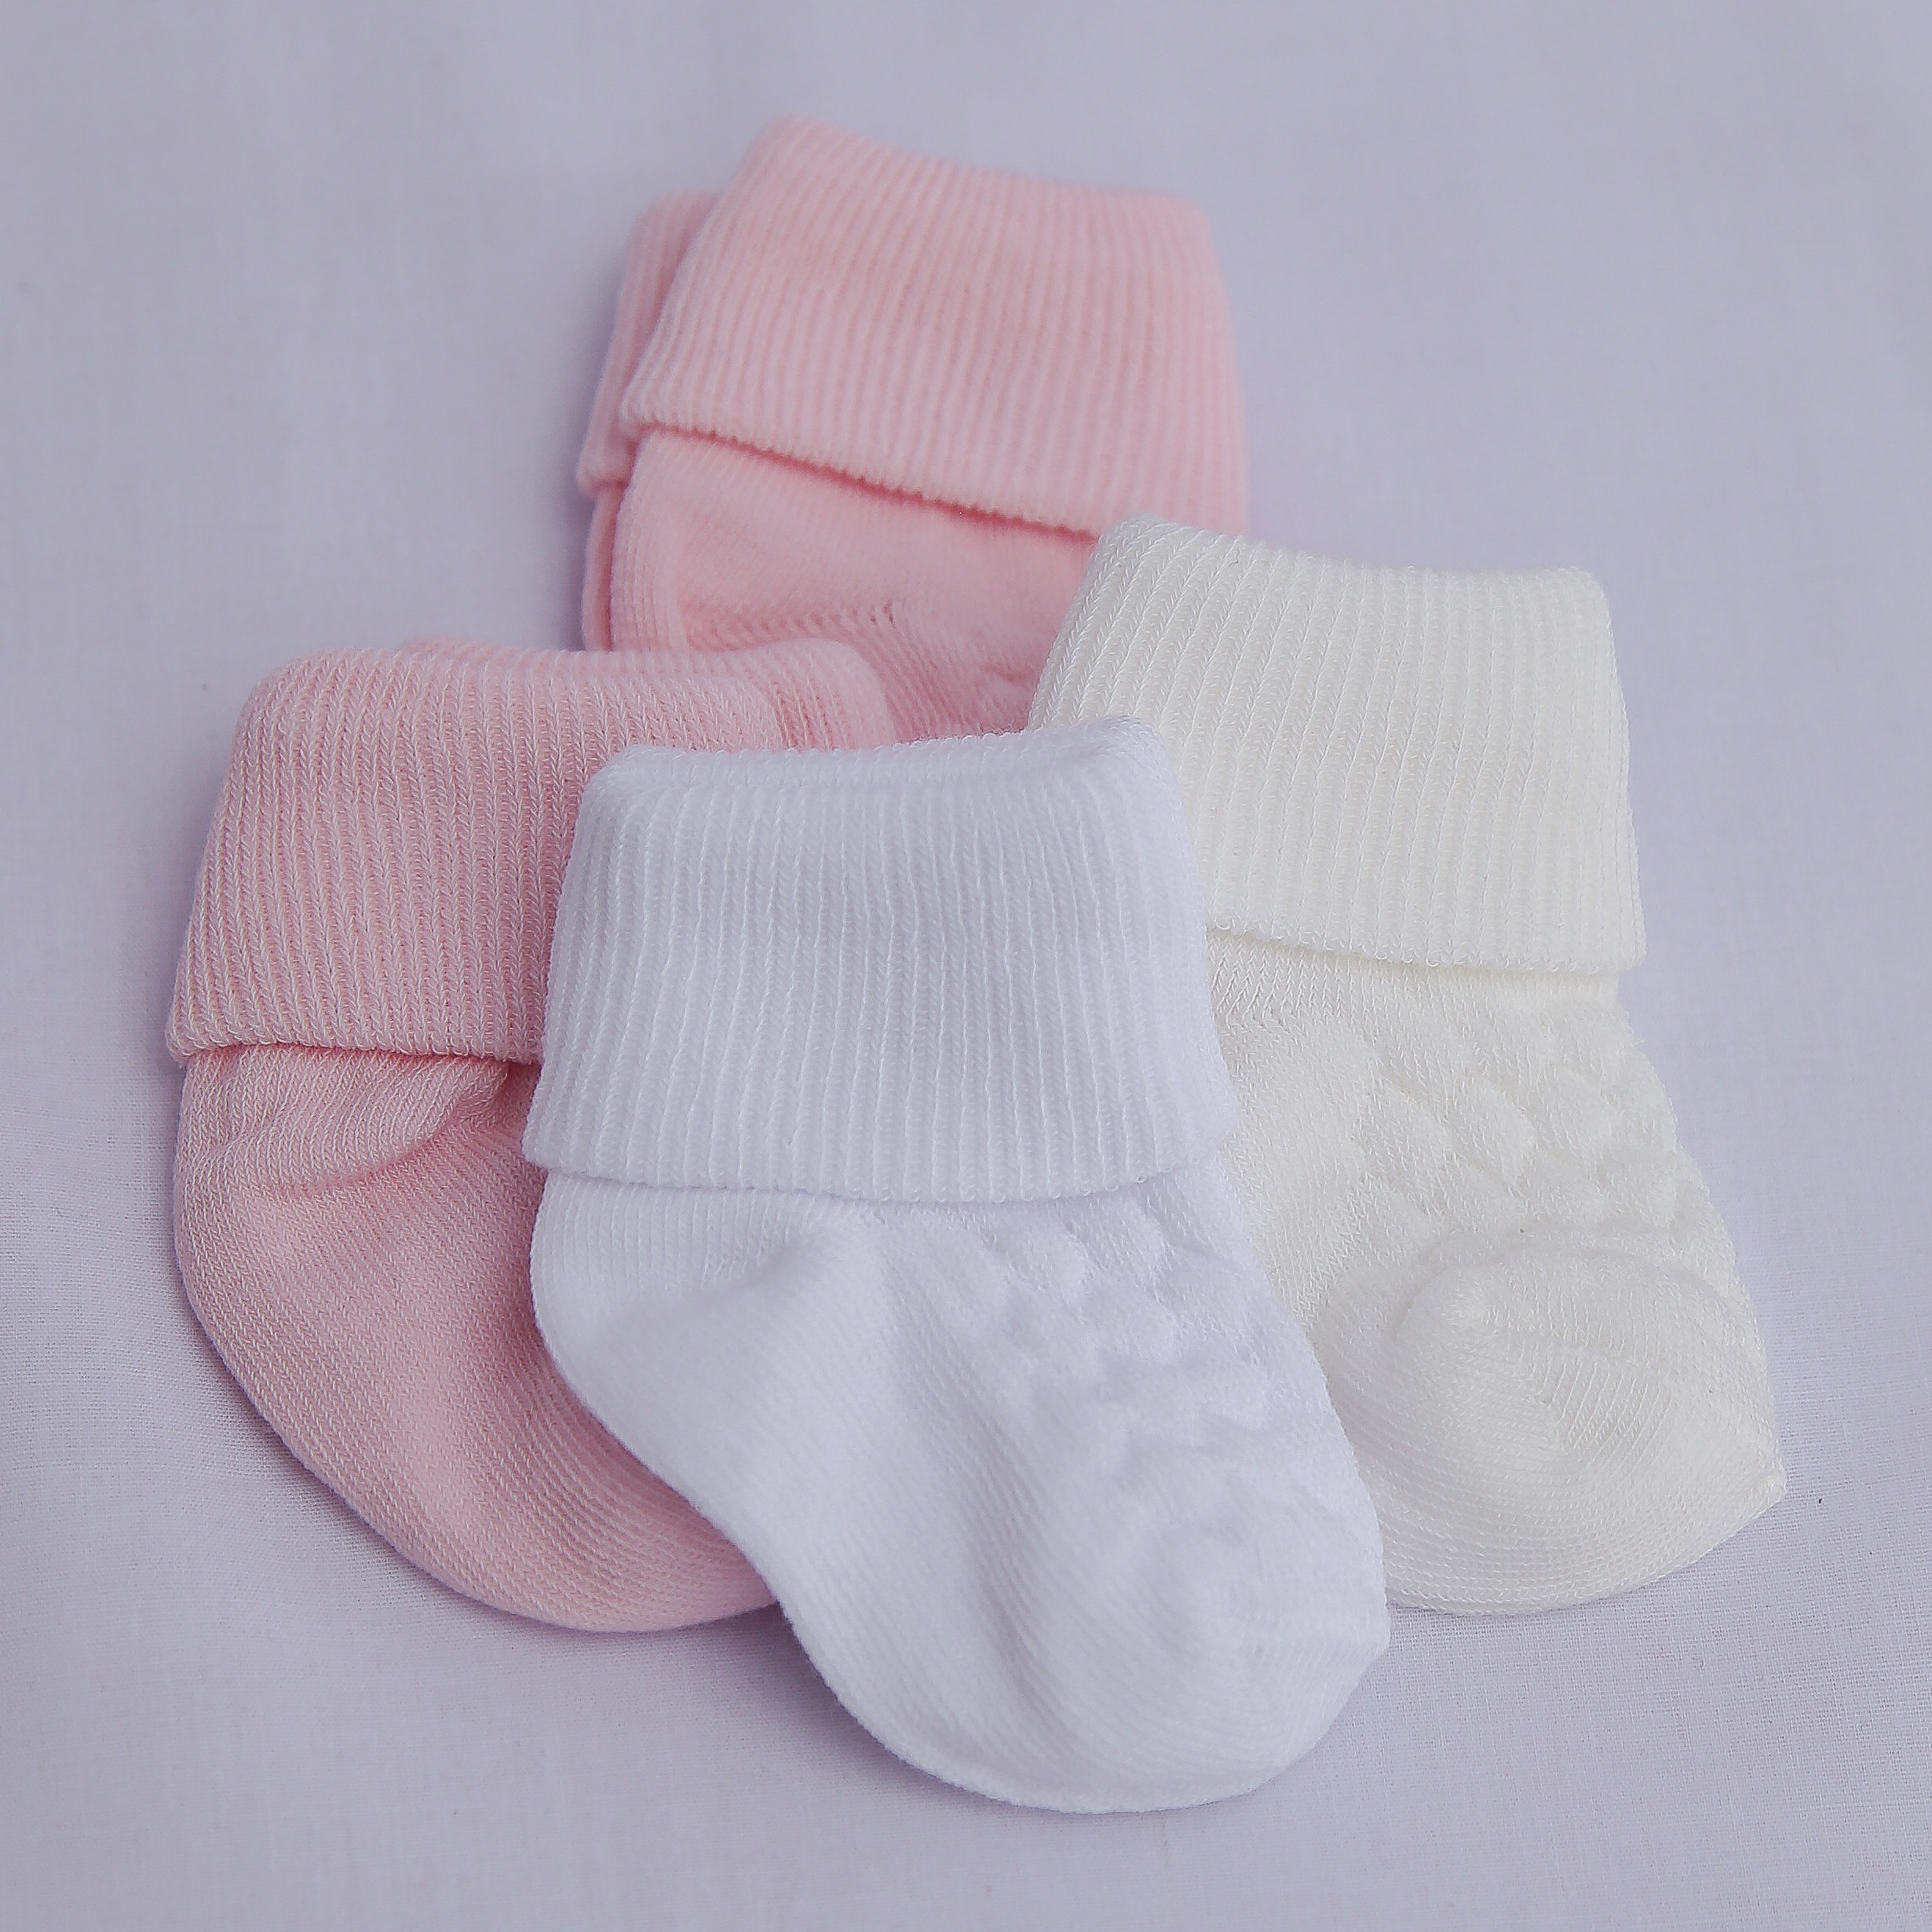 Baby Socks (Pack of 3 pairs)